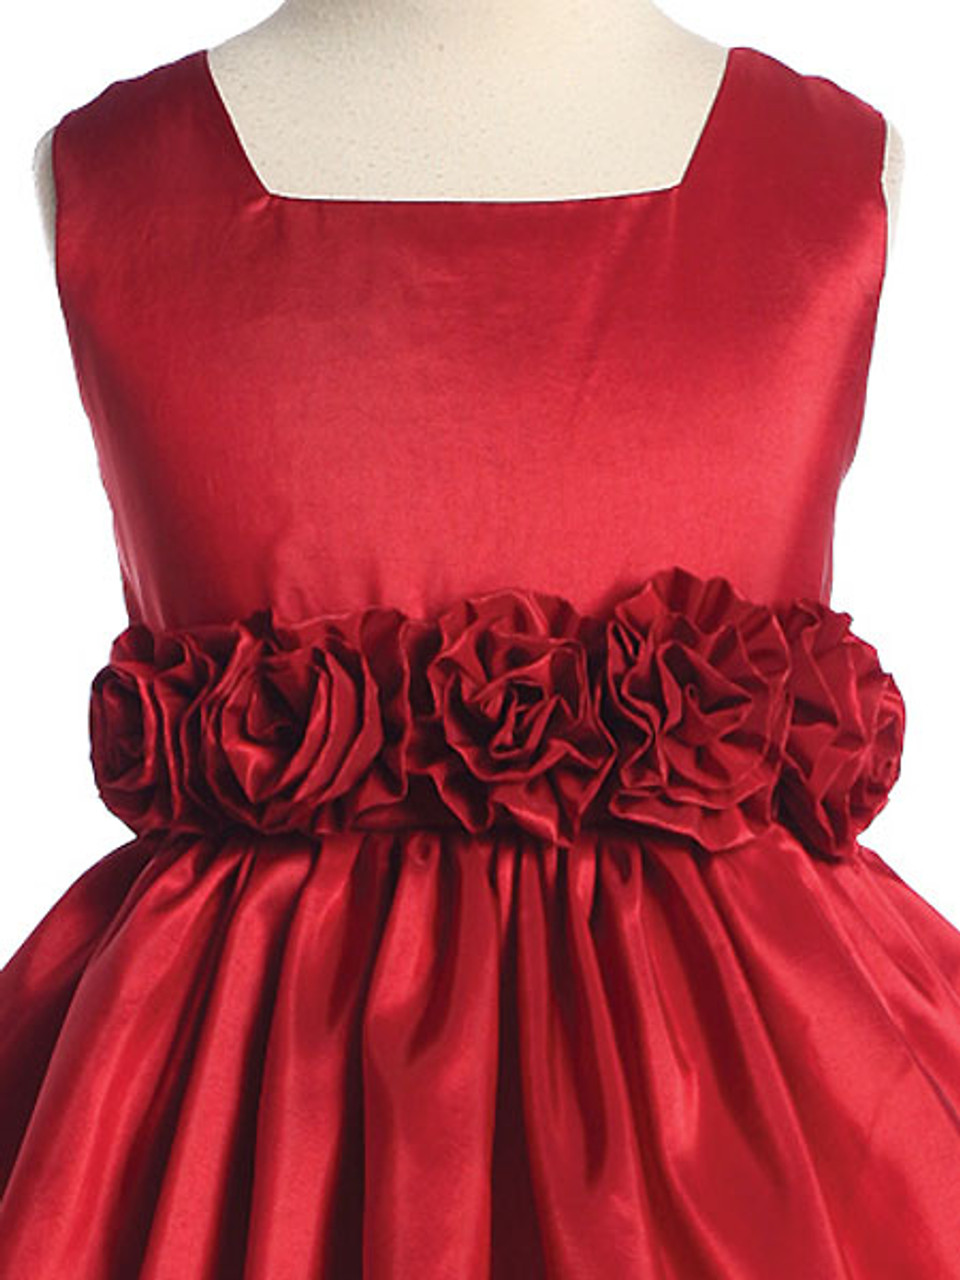 Red Dress Girl Child Princess | Party Dress Children Red | Red Party Dresses  Girls - Girls Party Dresses - Aliexpress